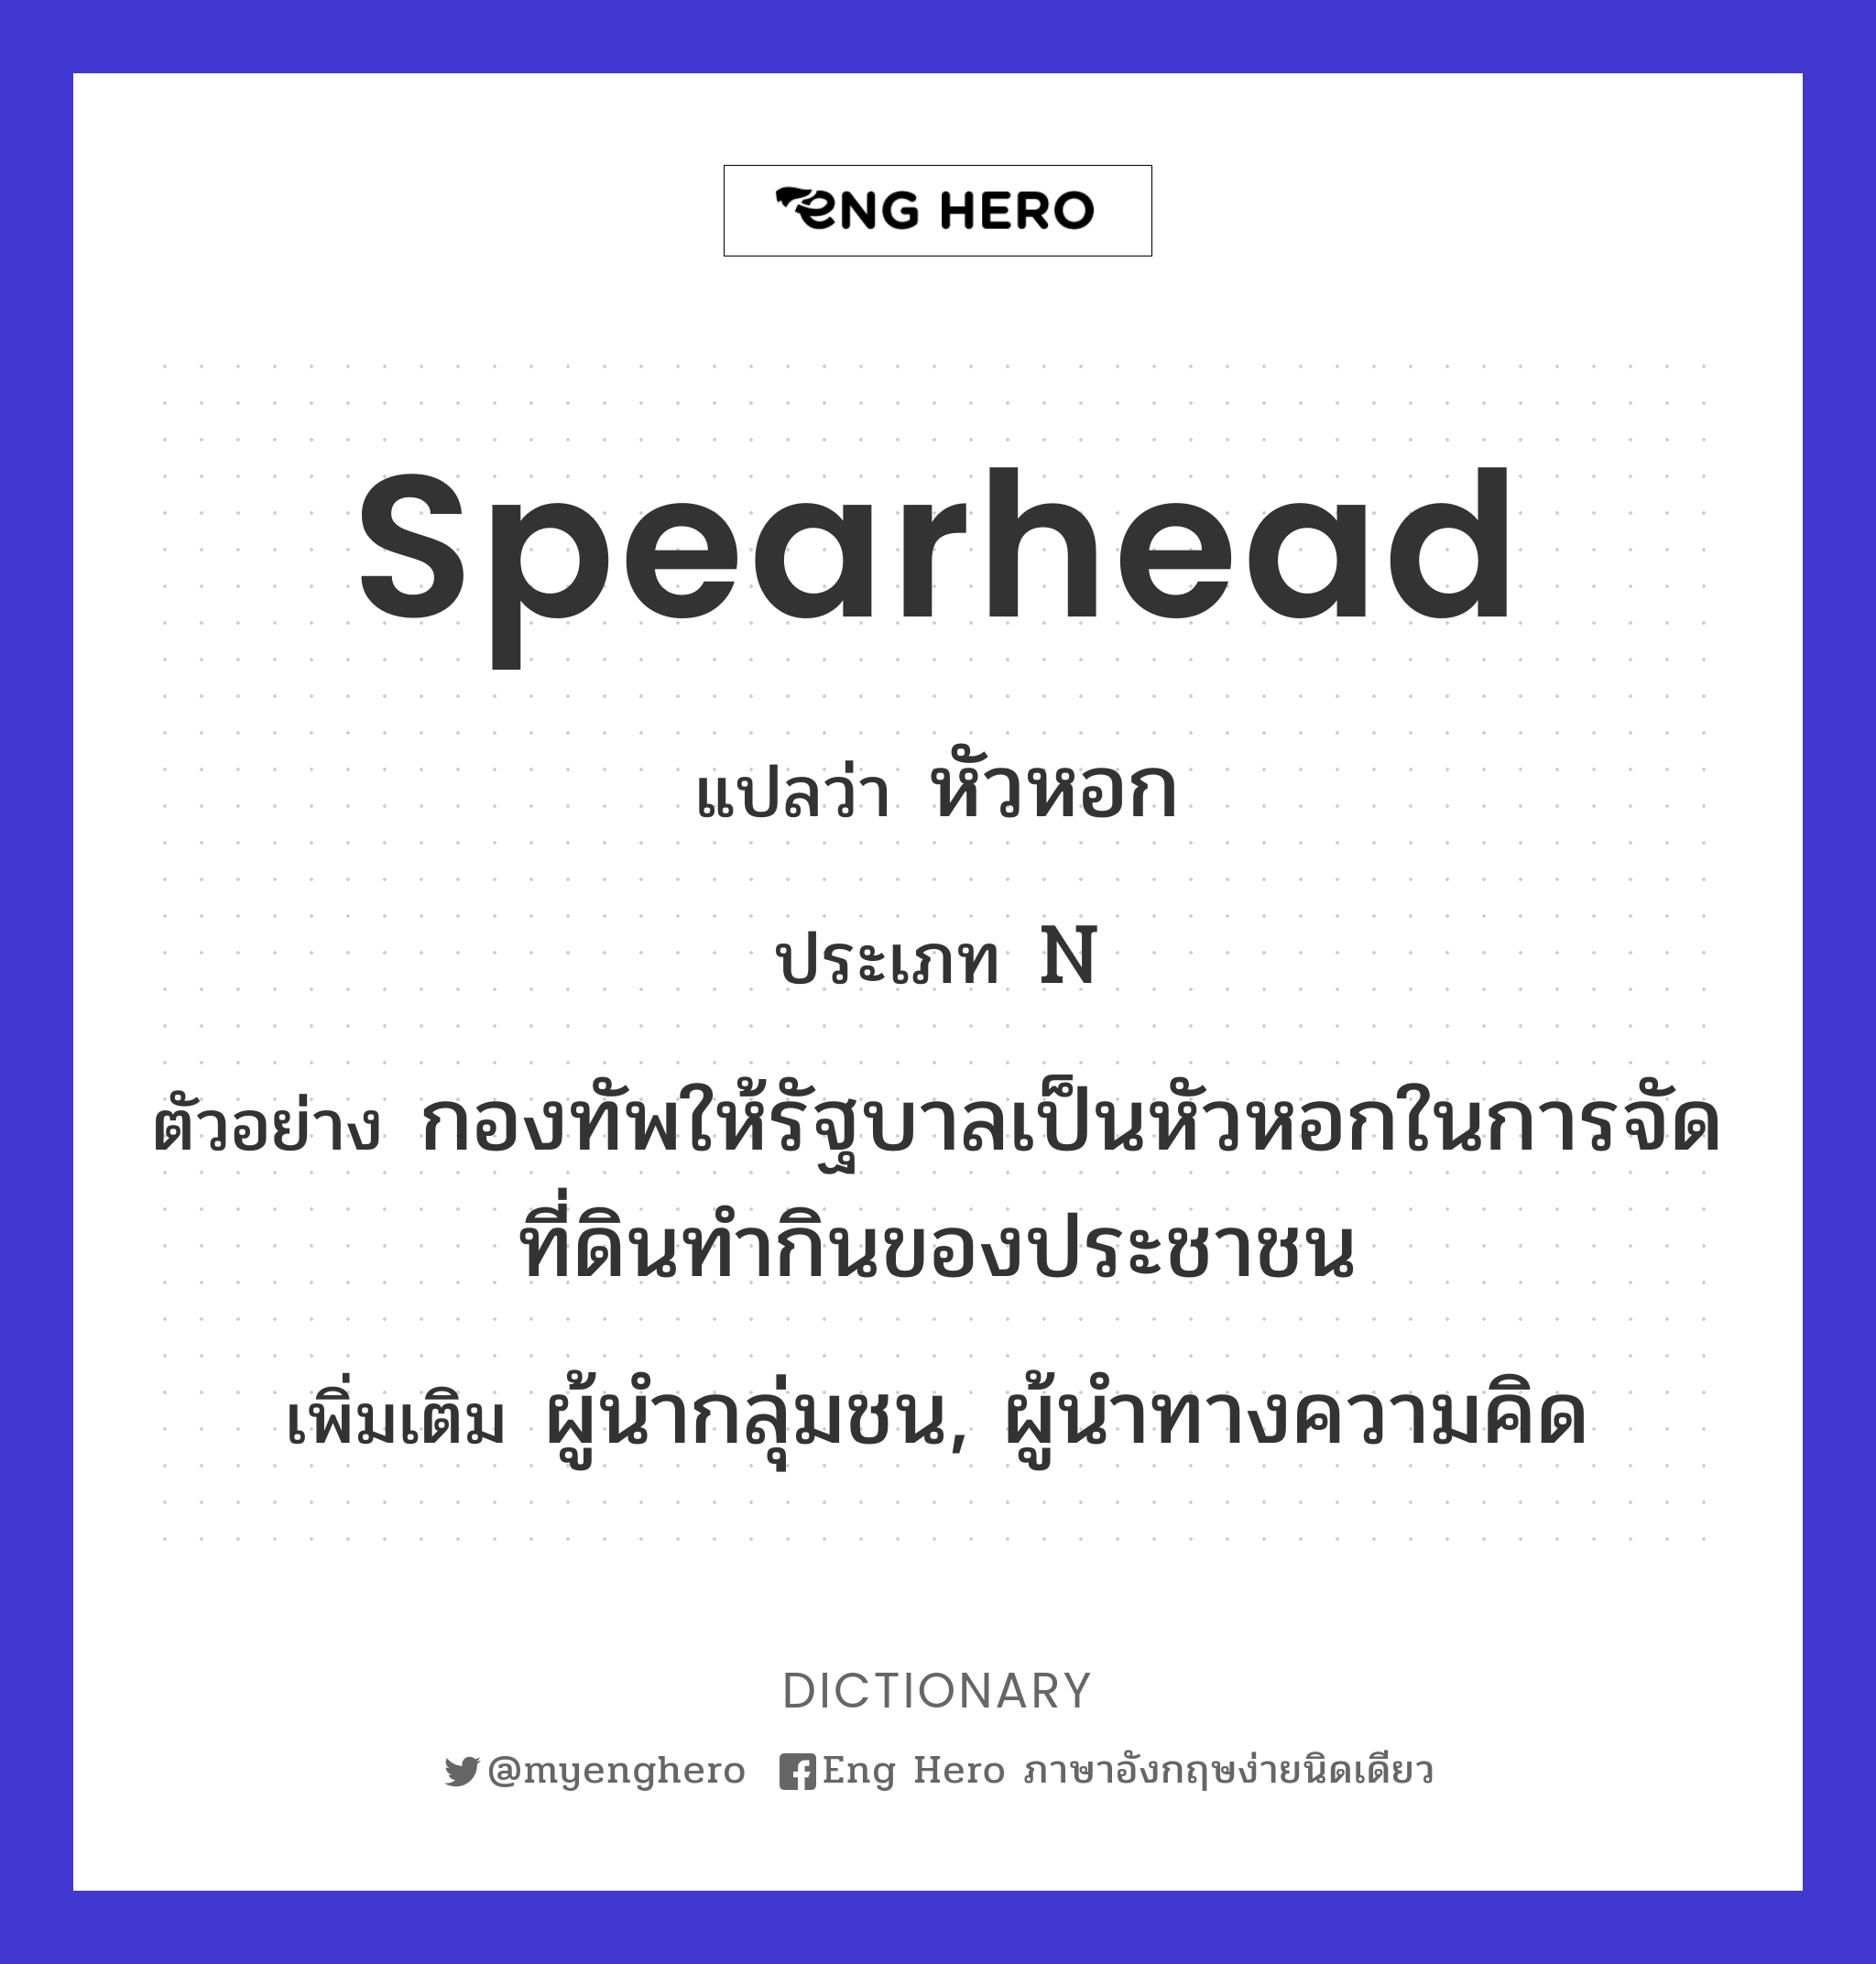 spearhead